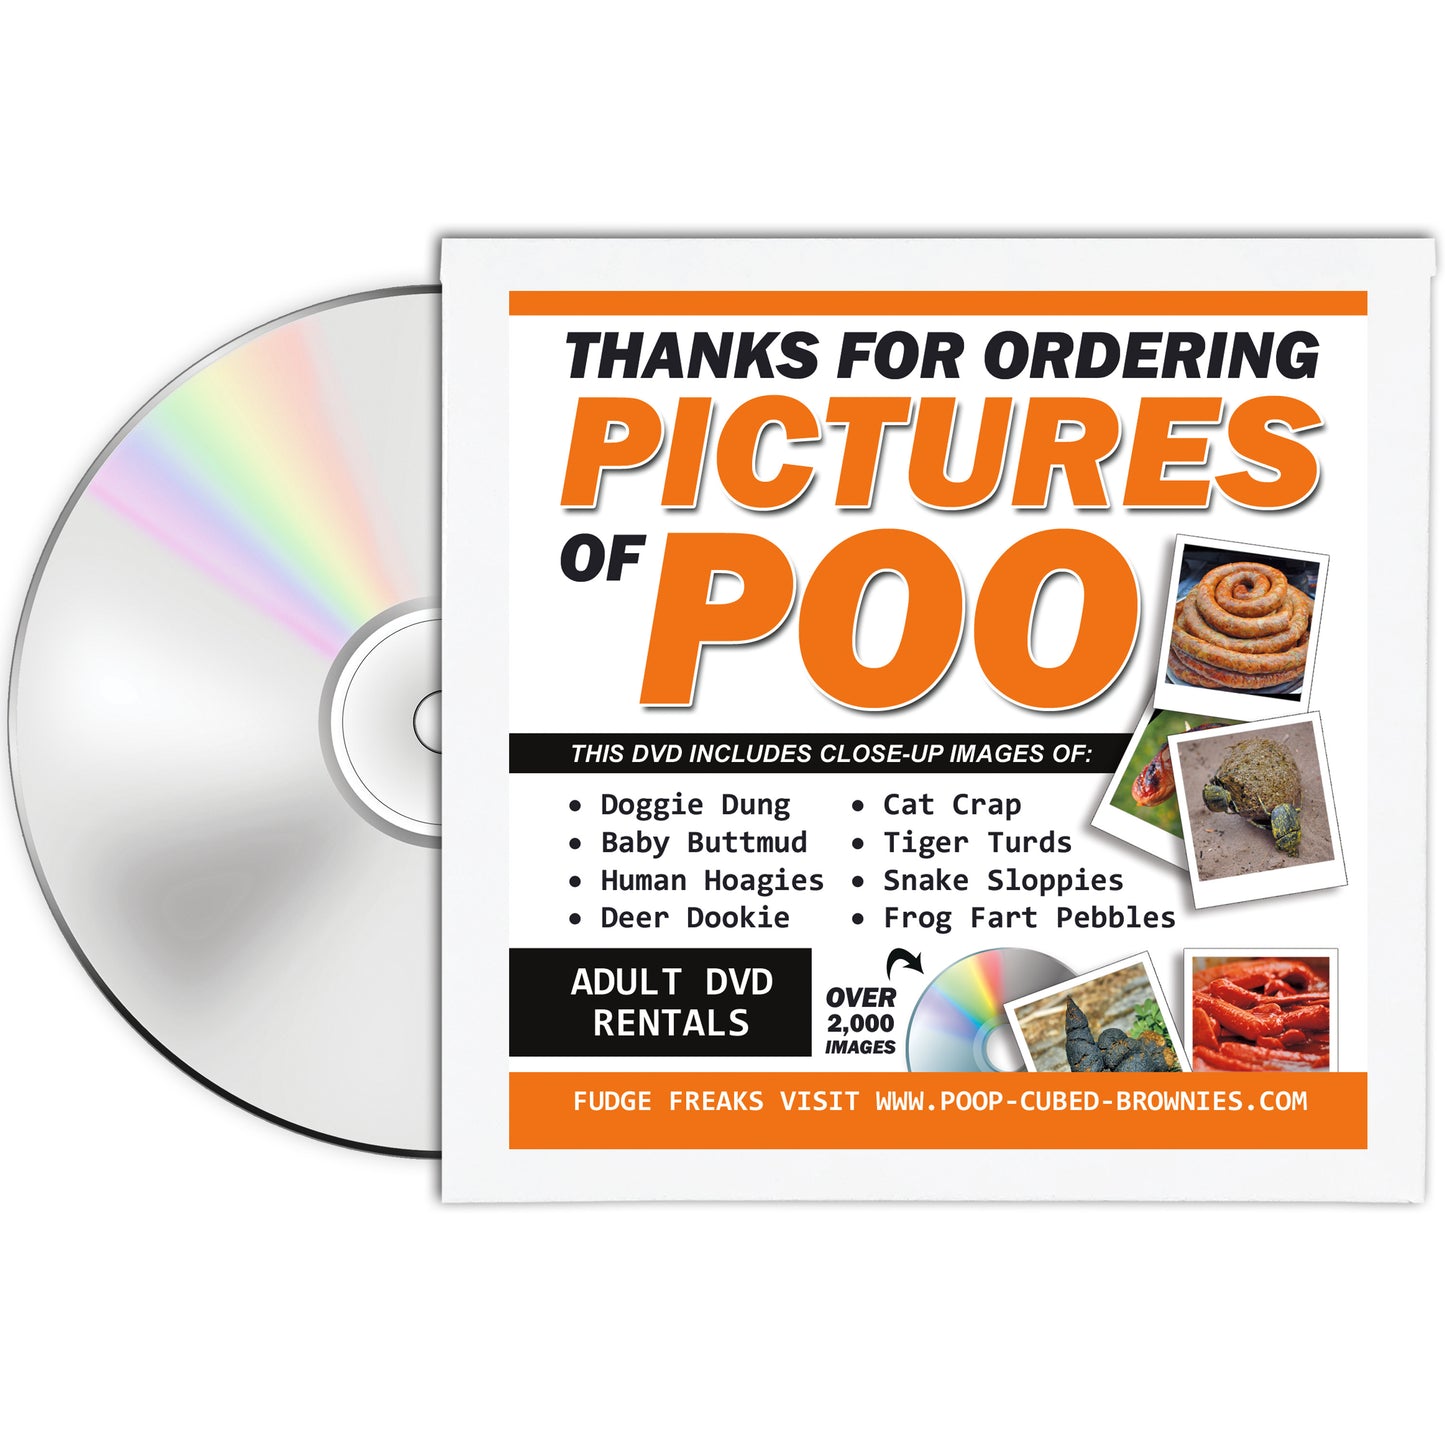 Pictures of Poo Fake DVD mail prank